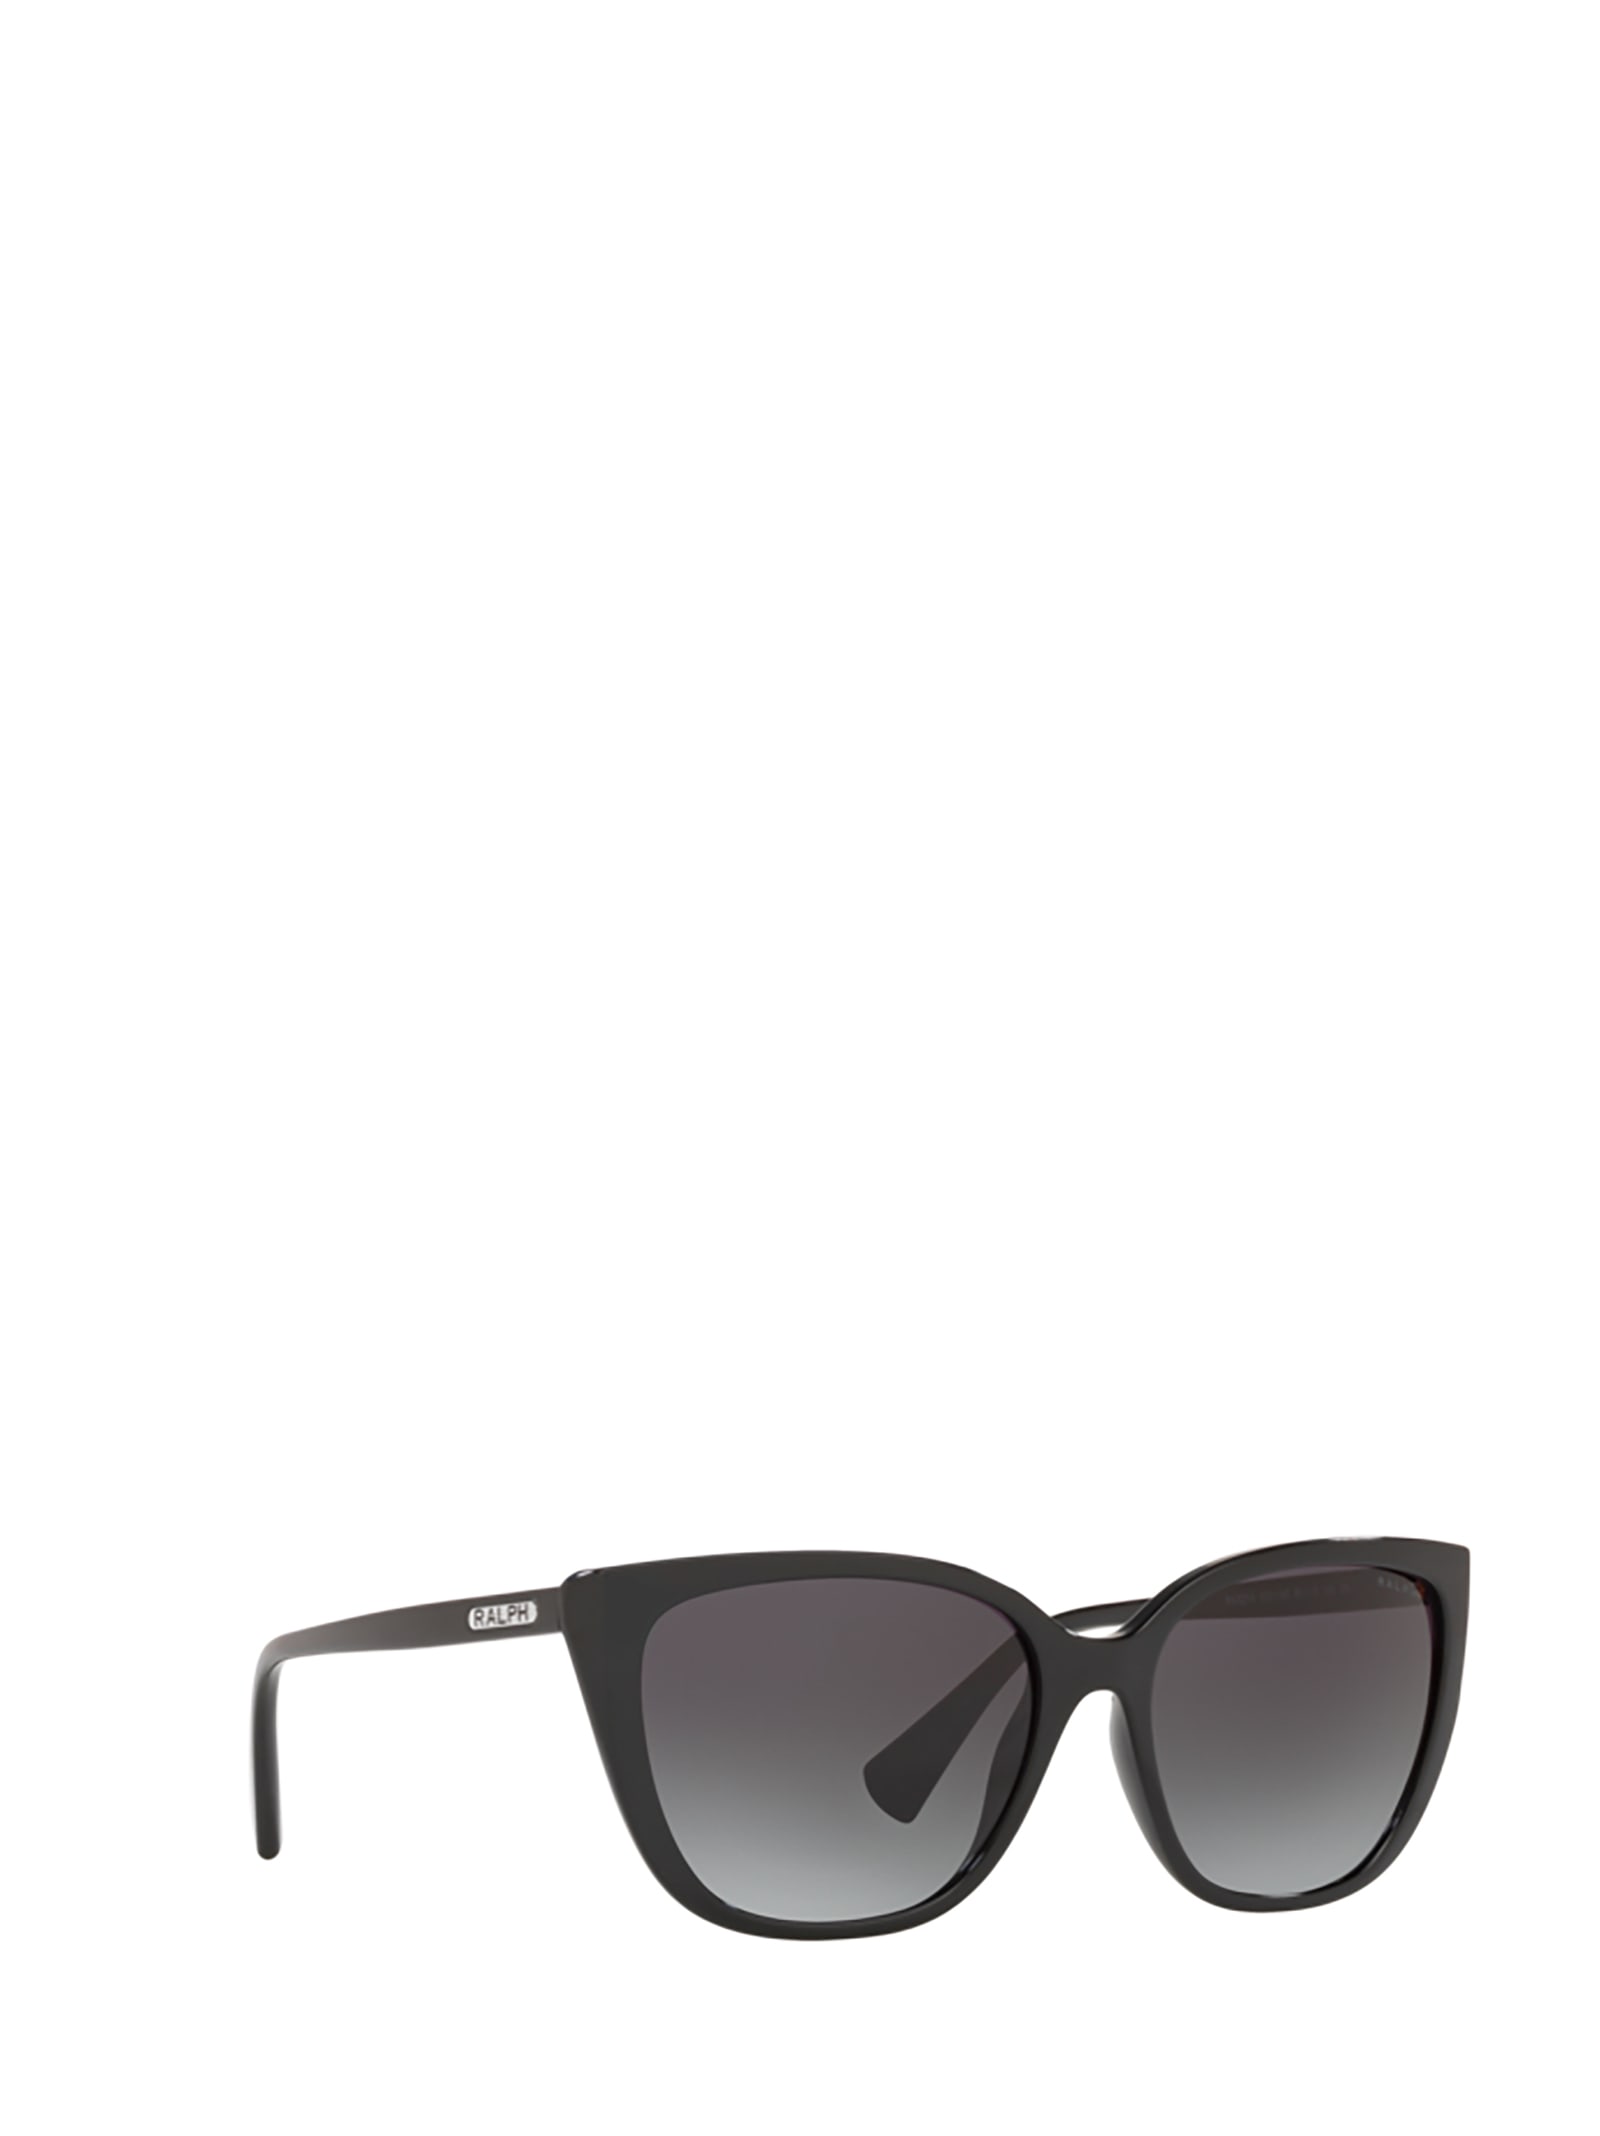 Shop Polo Ralph Lauren Ra5274 Shiny Black Sunglasses